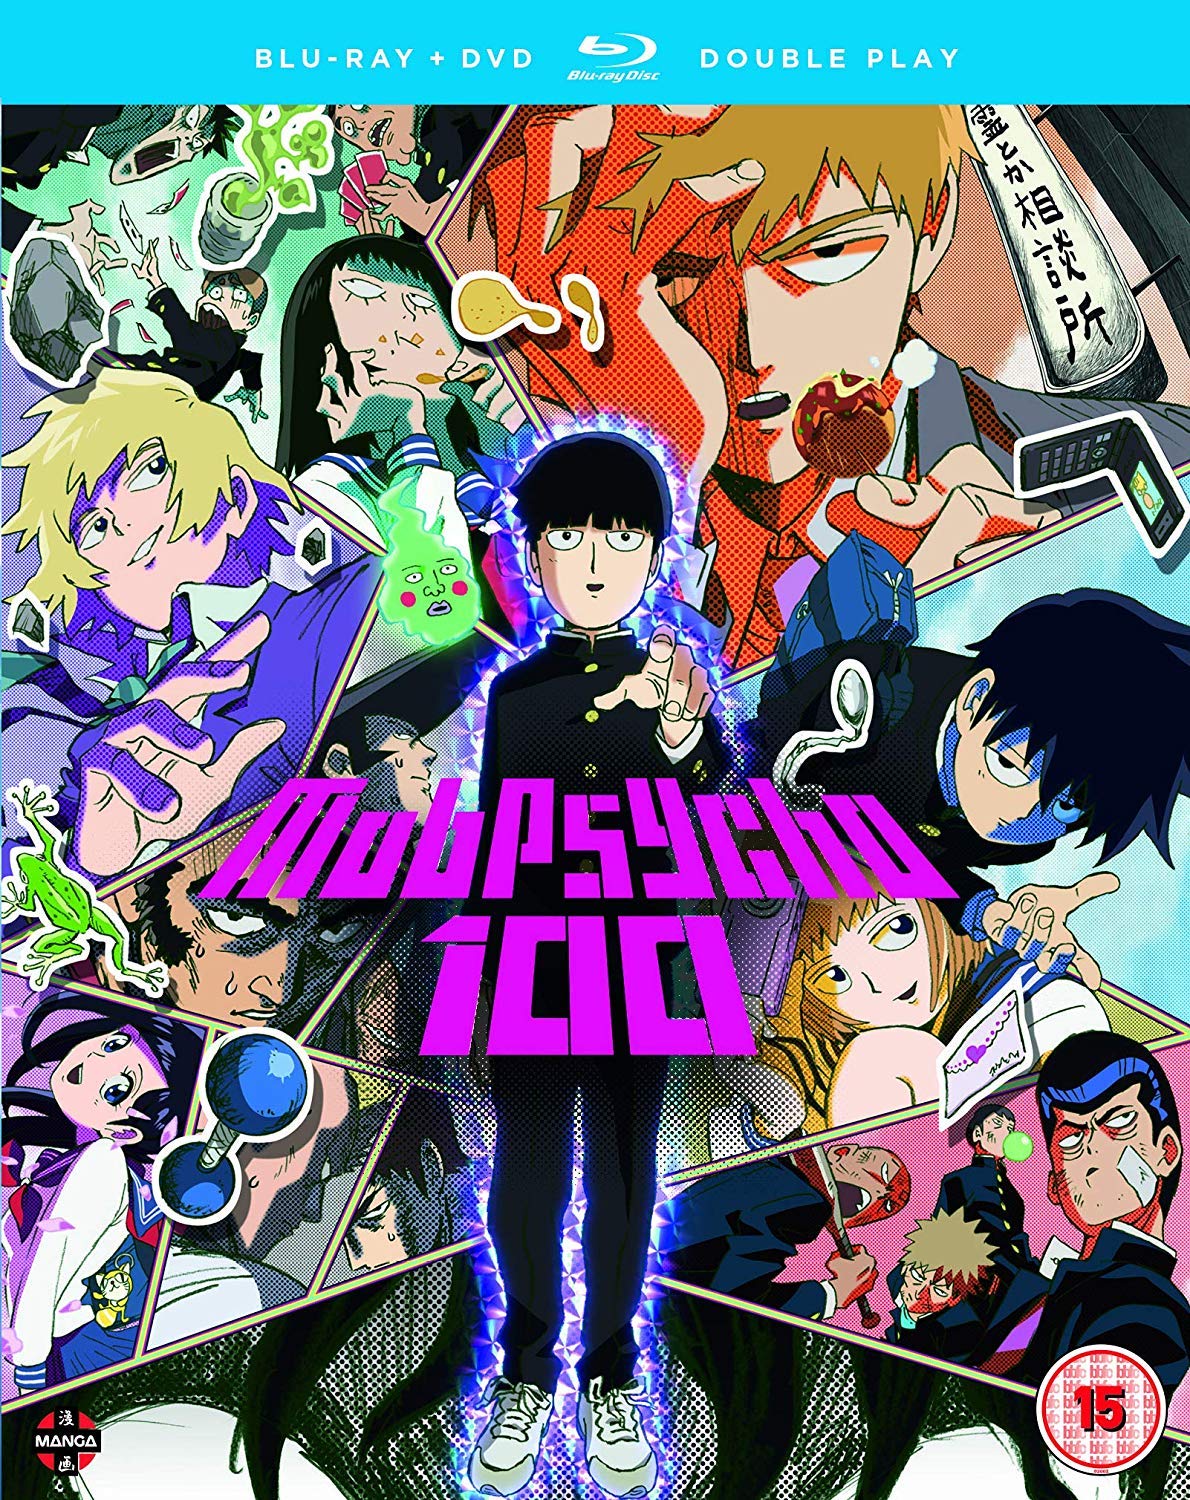 Mob Psycho 100 Season 1 Review • Anime UK News